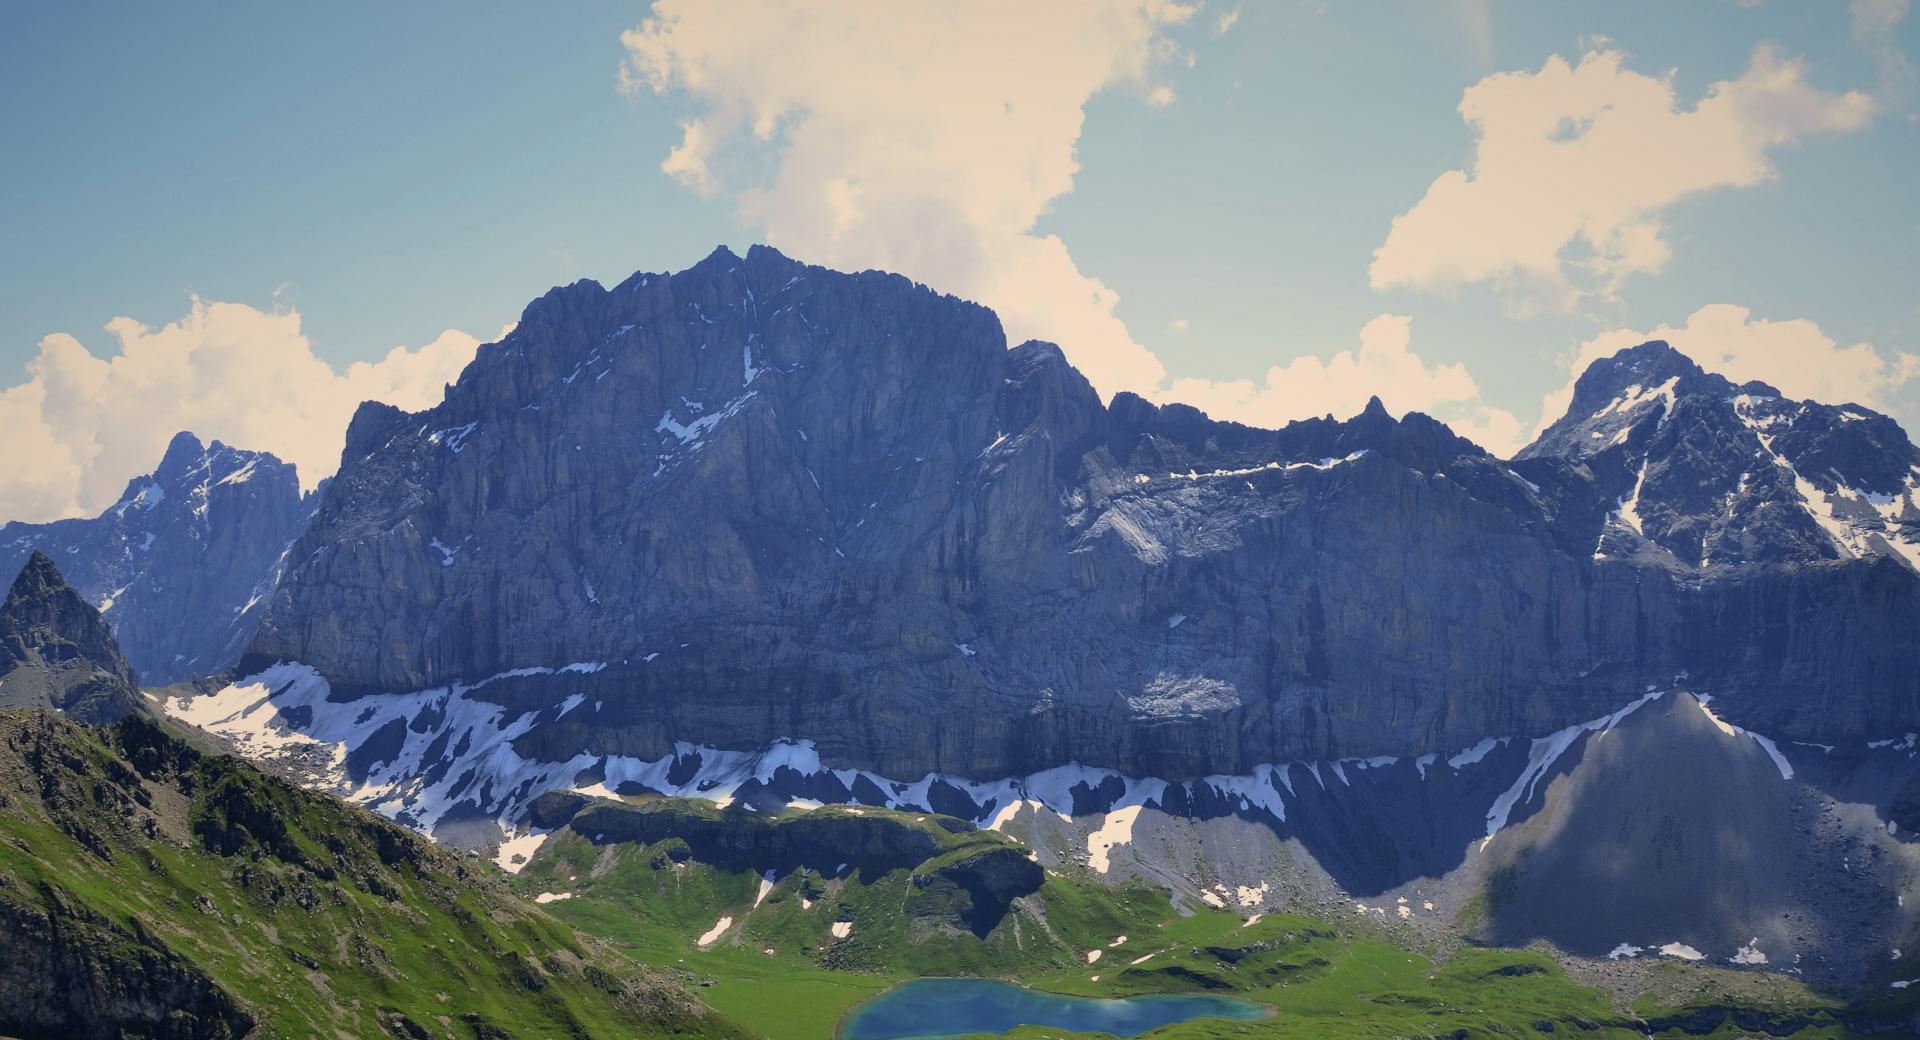 Beautiful Mountain Lake at 1024 x 768 size wallpapers HD quality